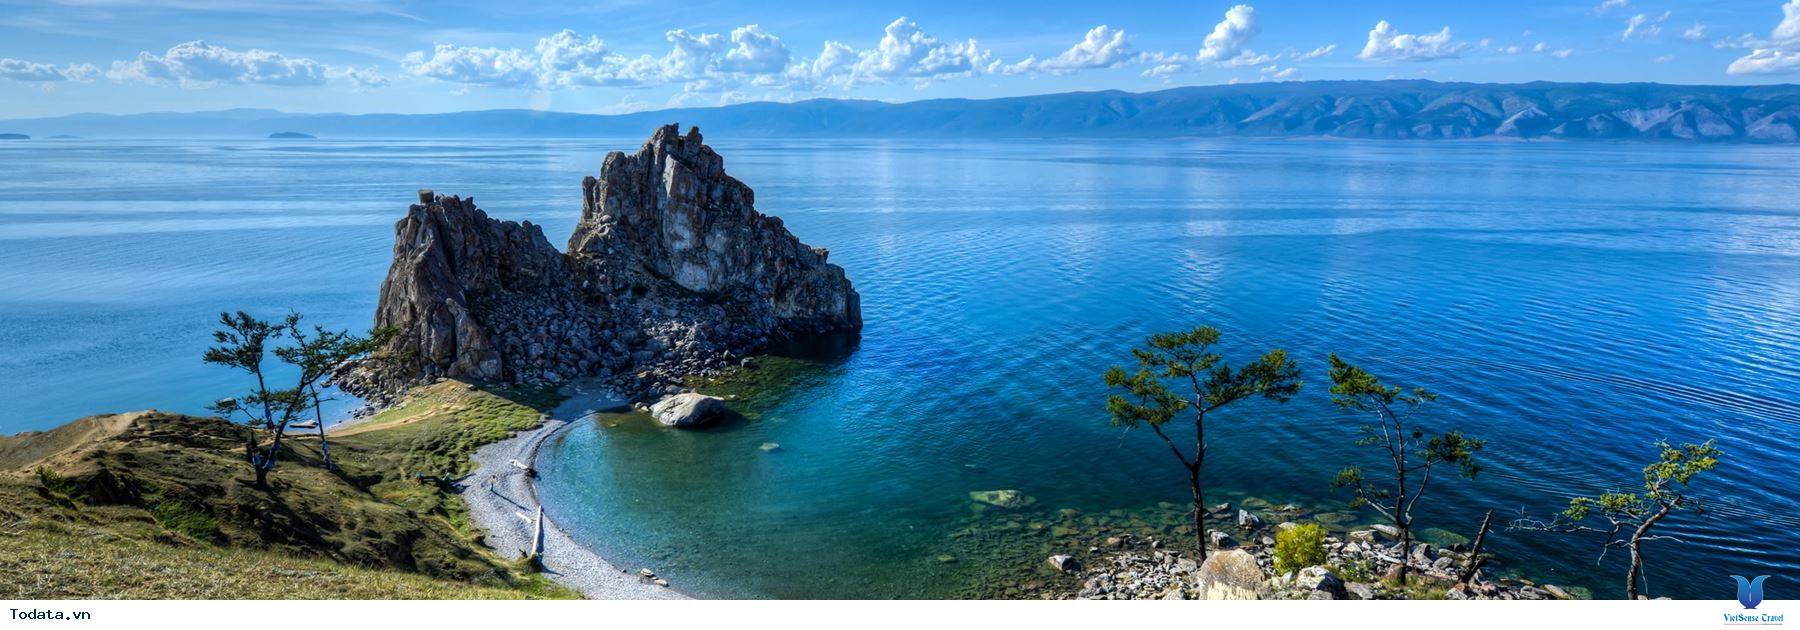 Khám phá hồ Baikal - Siberia 7 ngày năm 2019